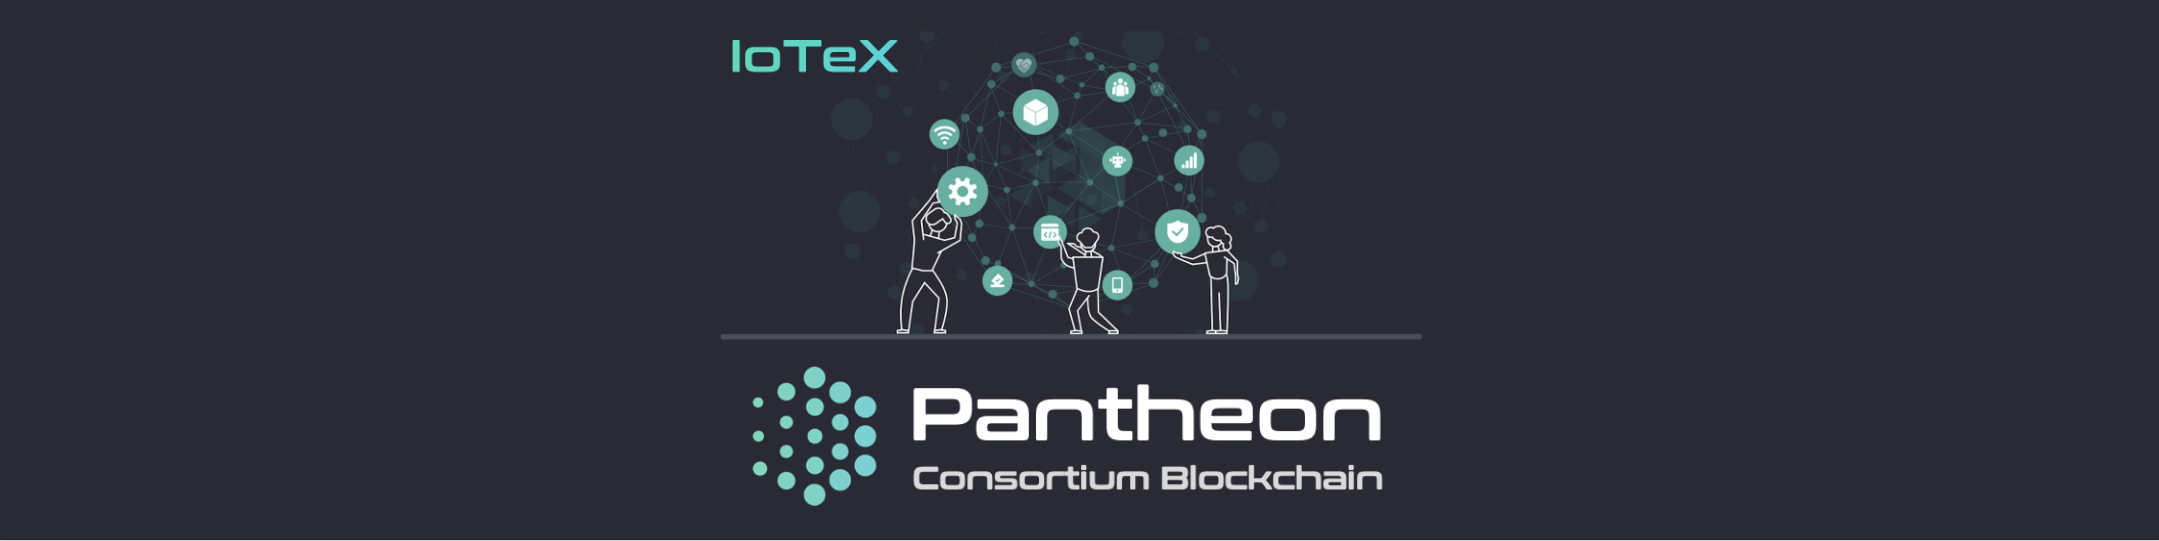 IoTeX Pantheon — Enterprise-Ready Consortium Blockchain for IoT